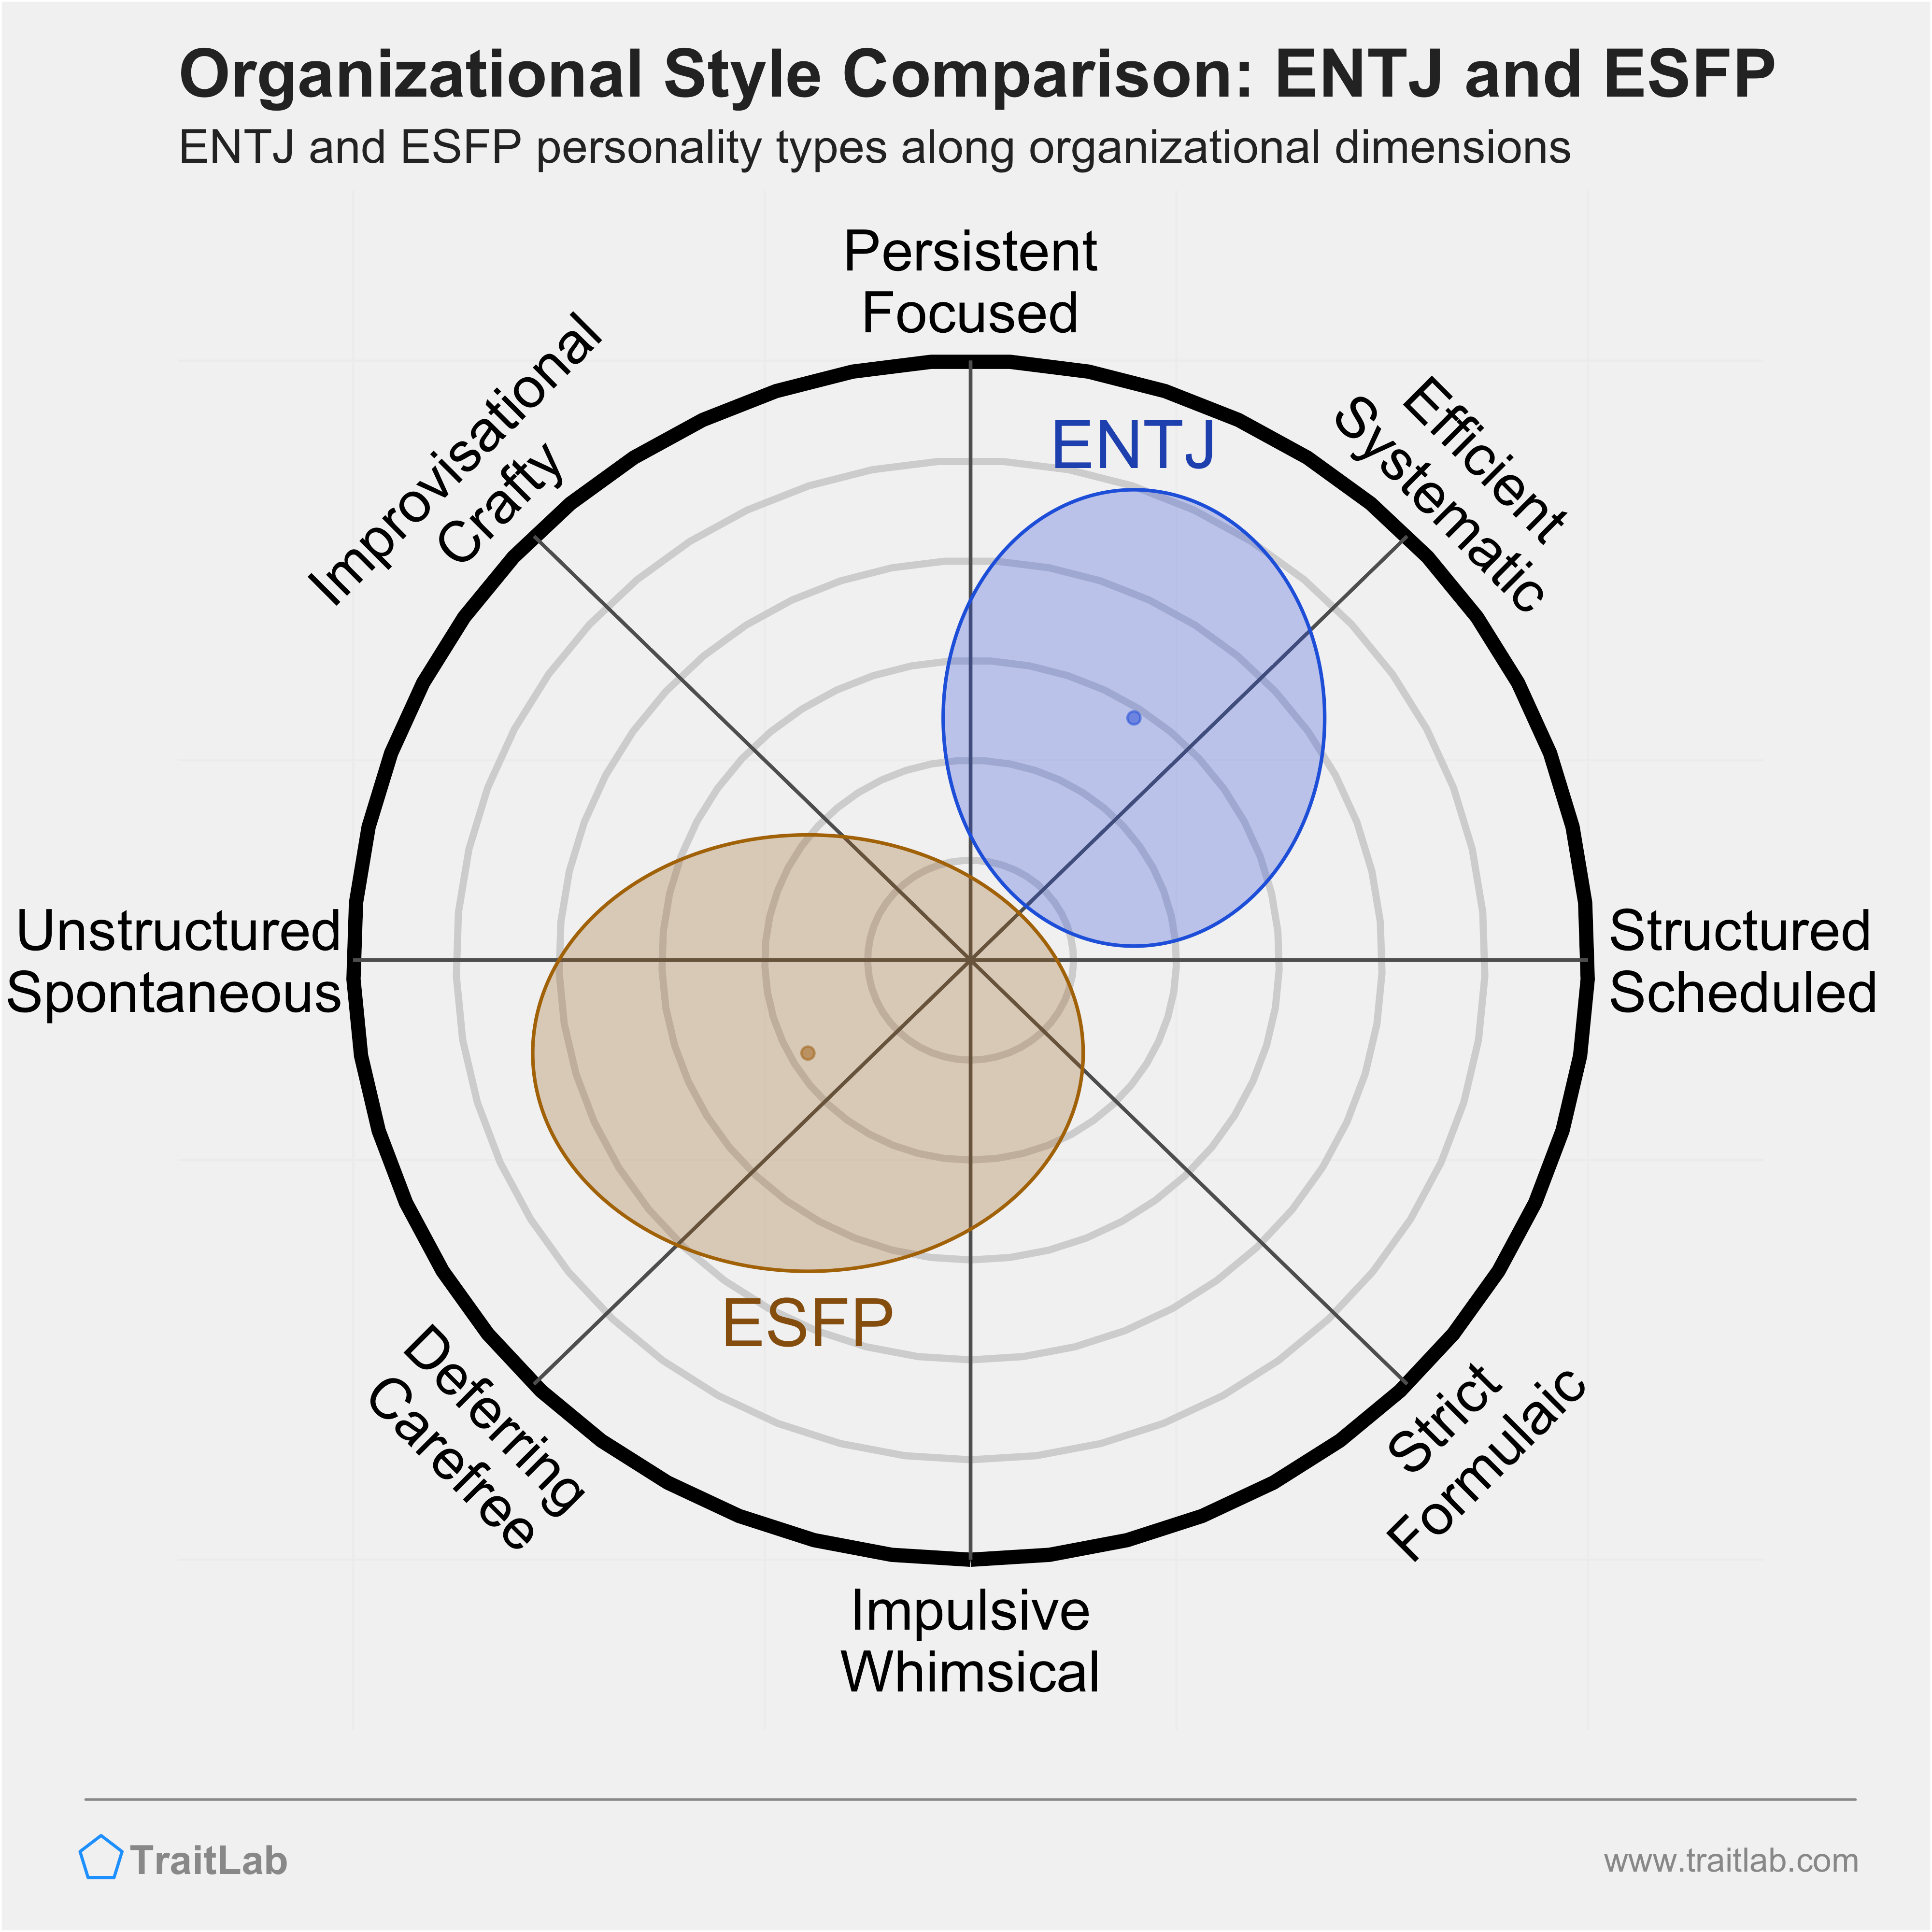 ENTJ and ESFP comparison across organizational dimensions